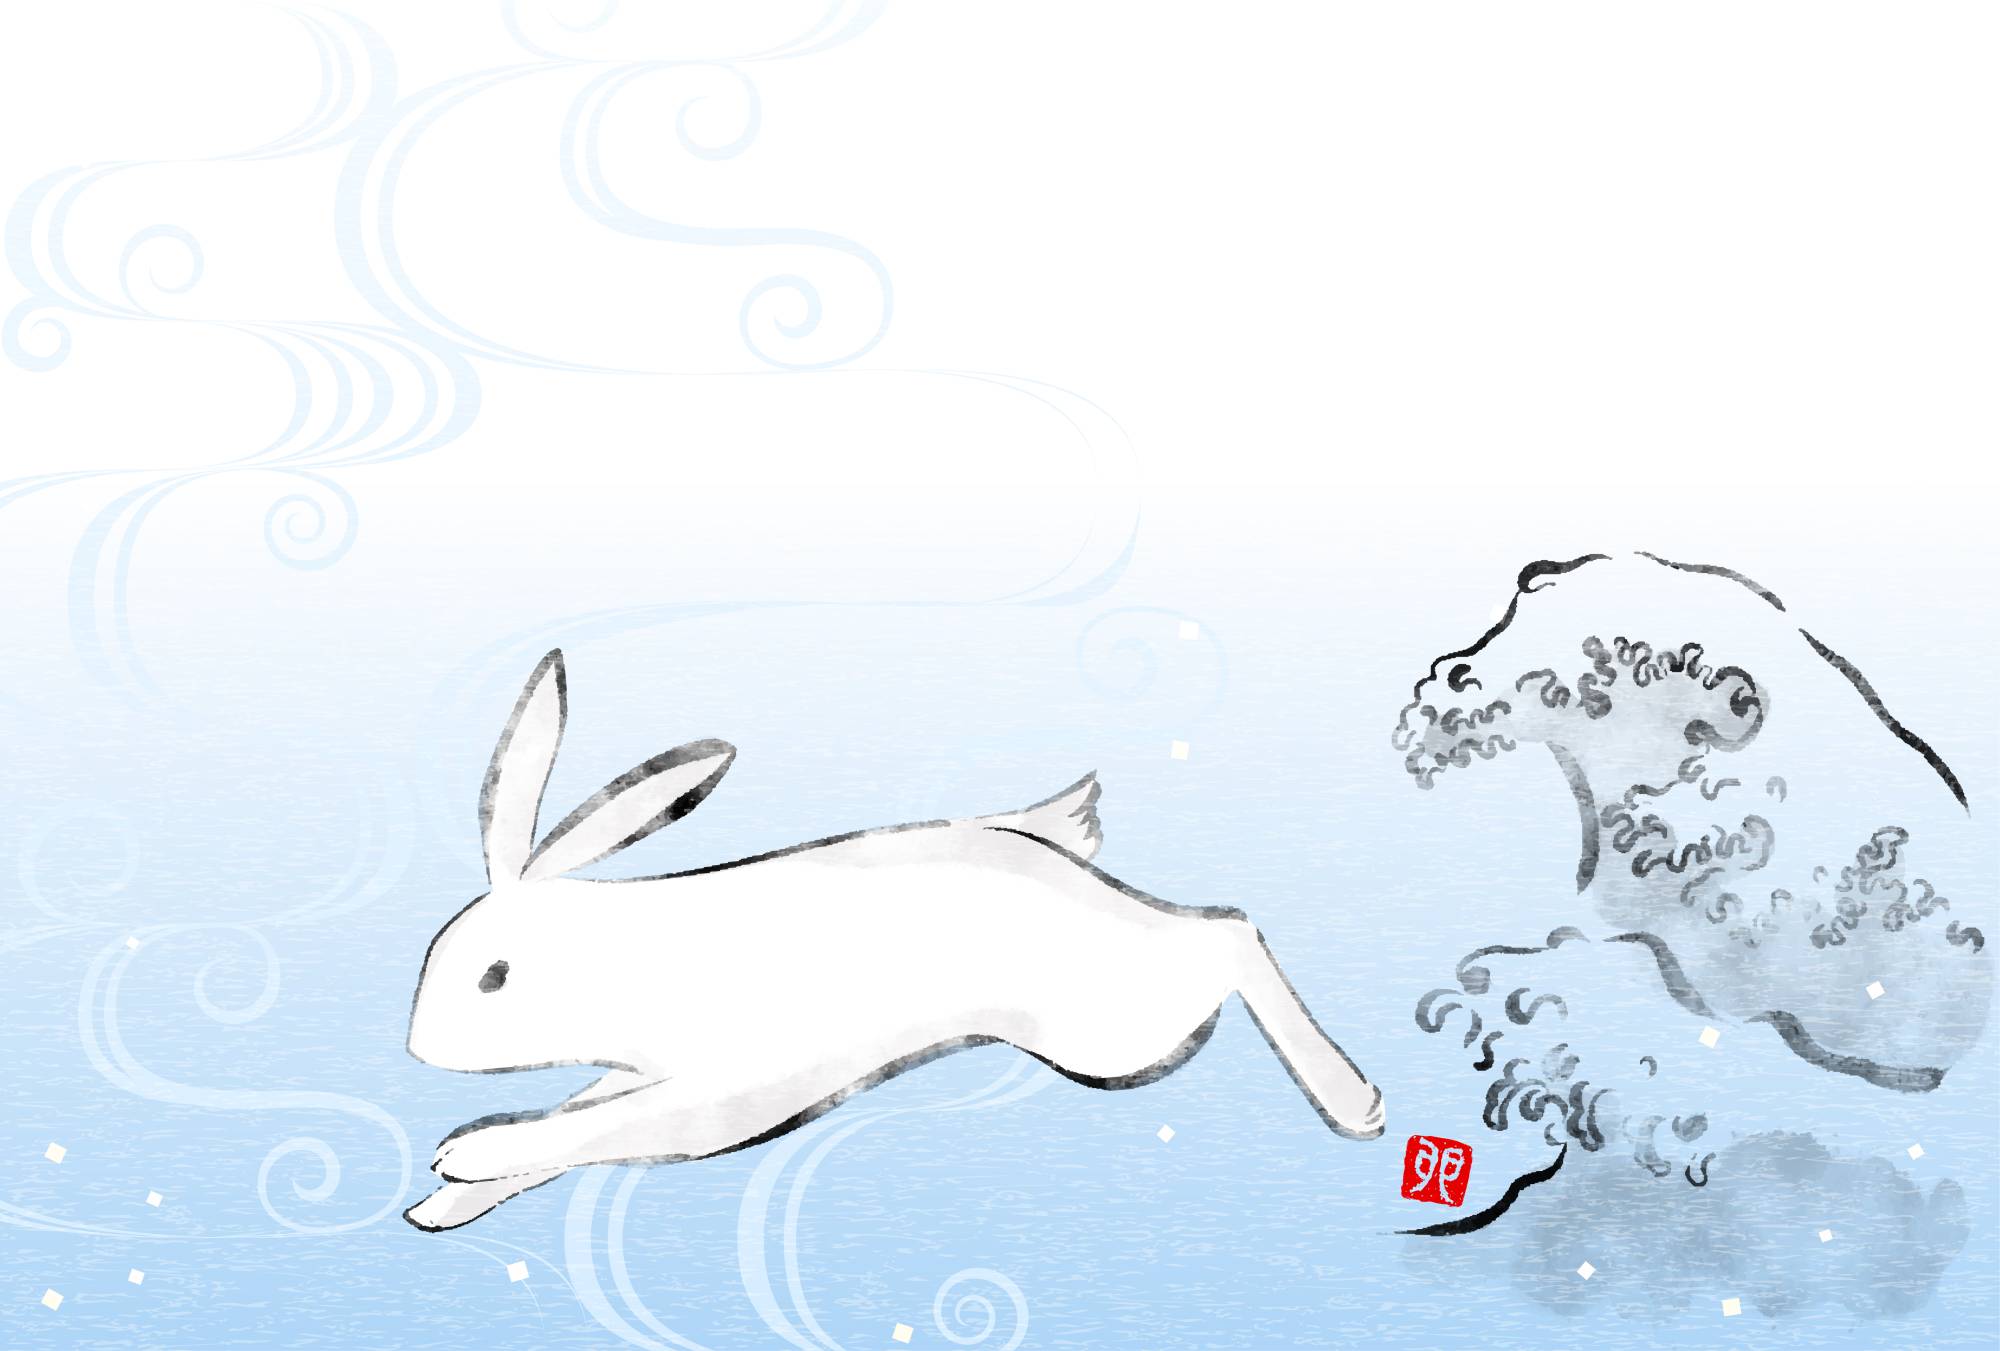 Lunar NEW YEAR 2023 Hopping Year Rabbit